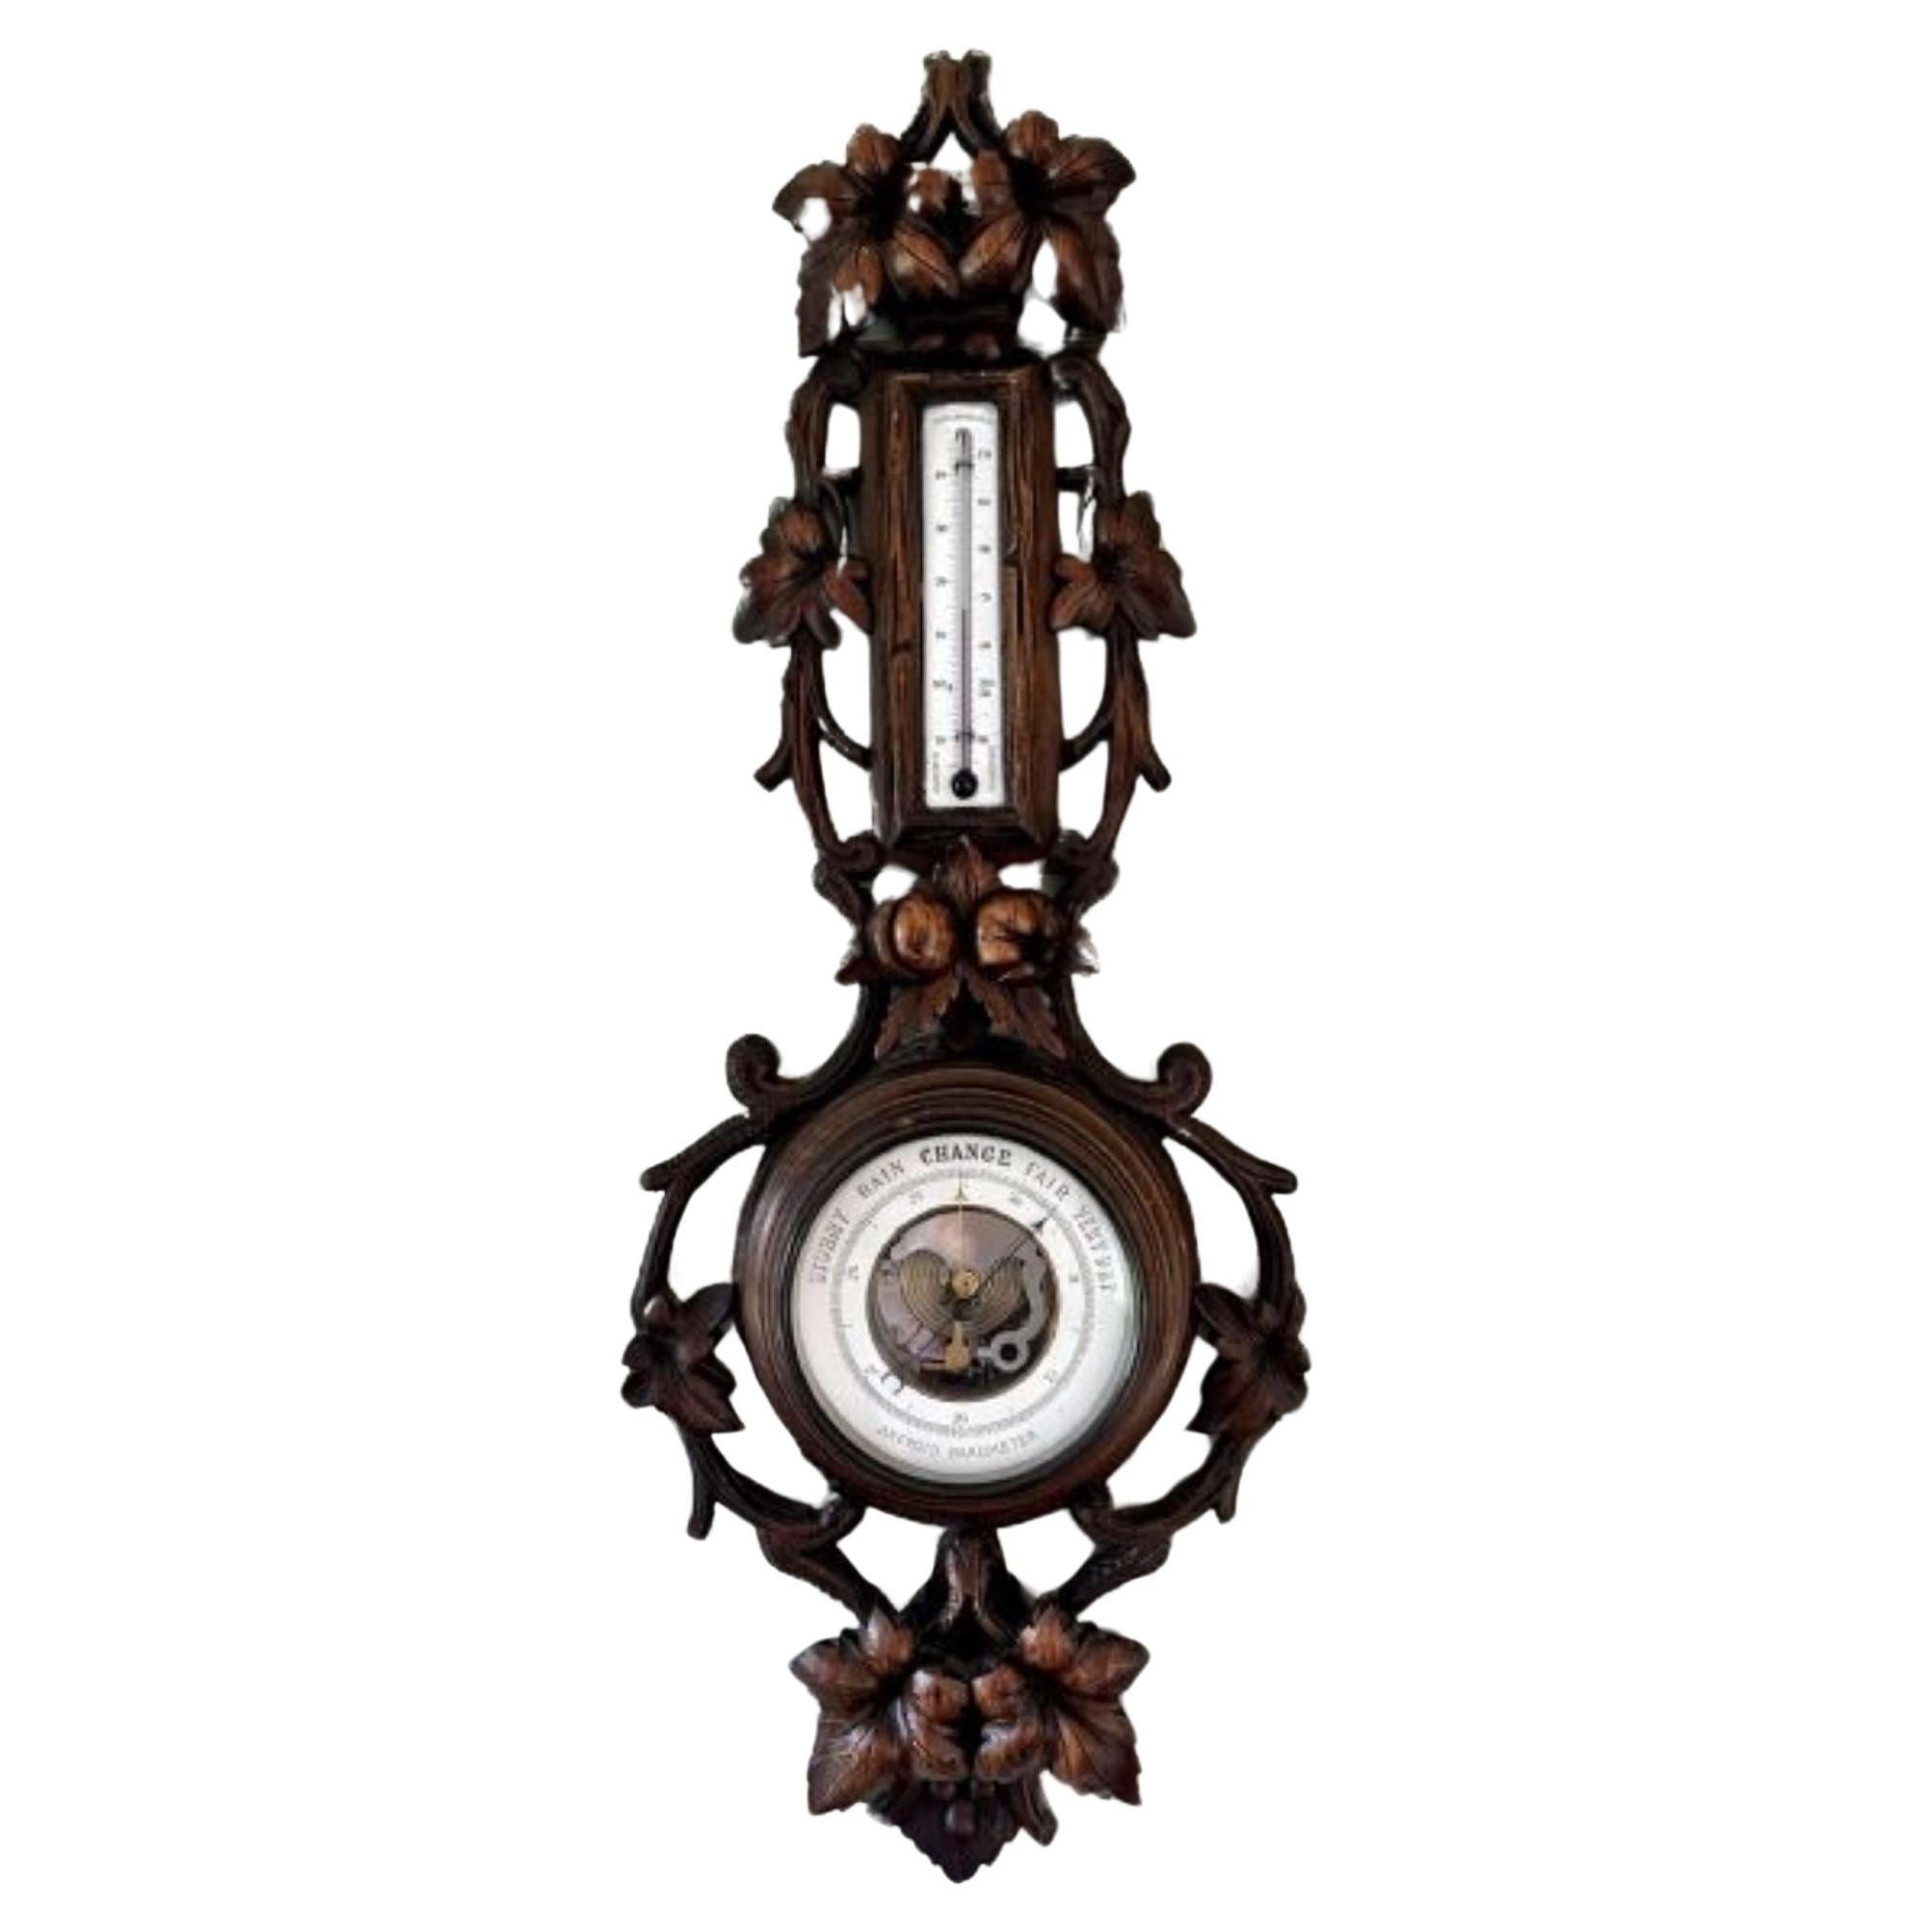 Fantastic quality antique Victorian Black Forest aneroid barometer 